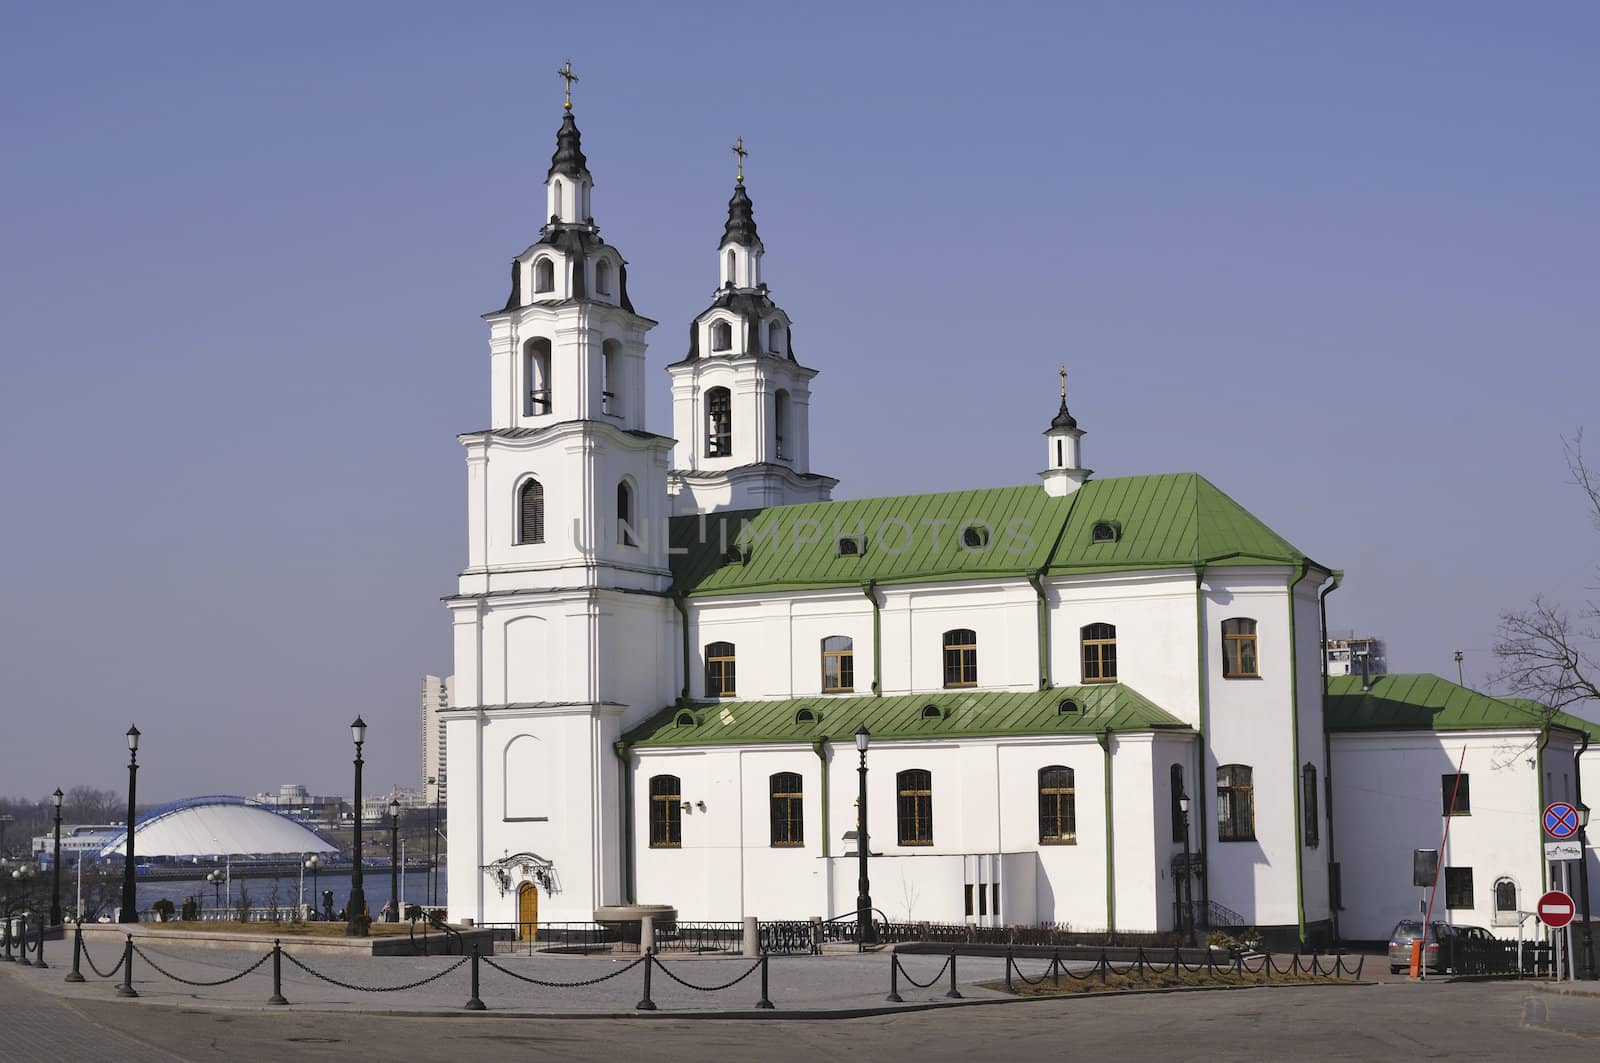 side-view of Saint Spirit cathedral in Minsk, Belarus